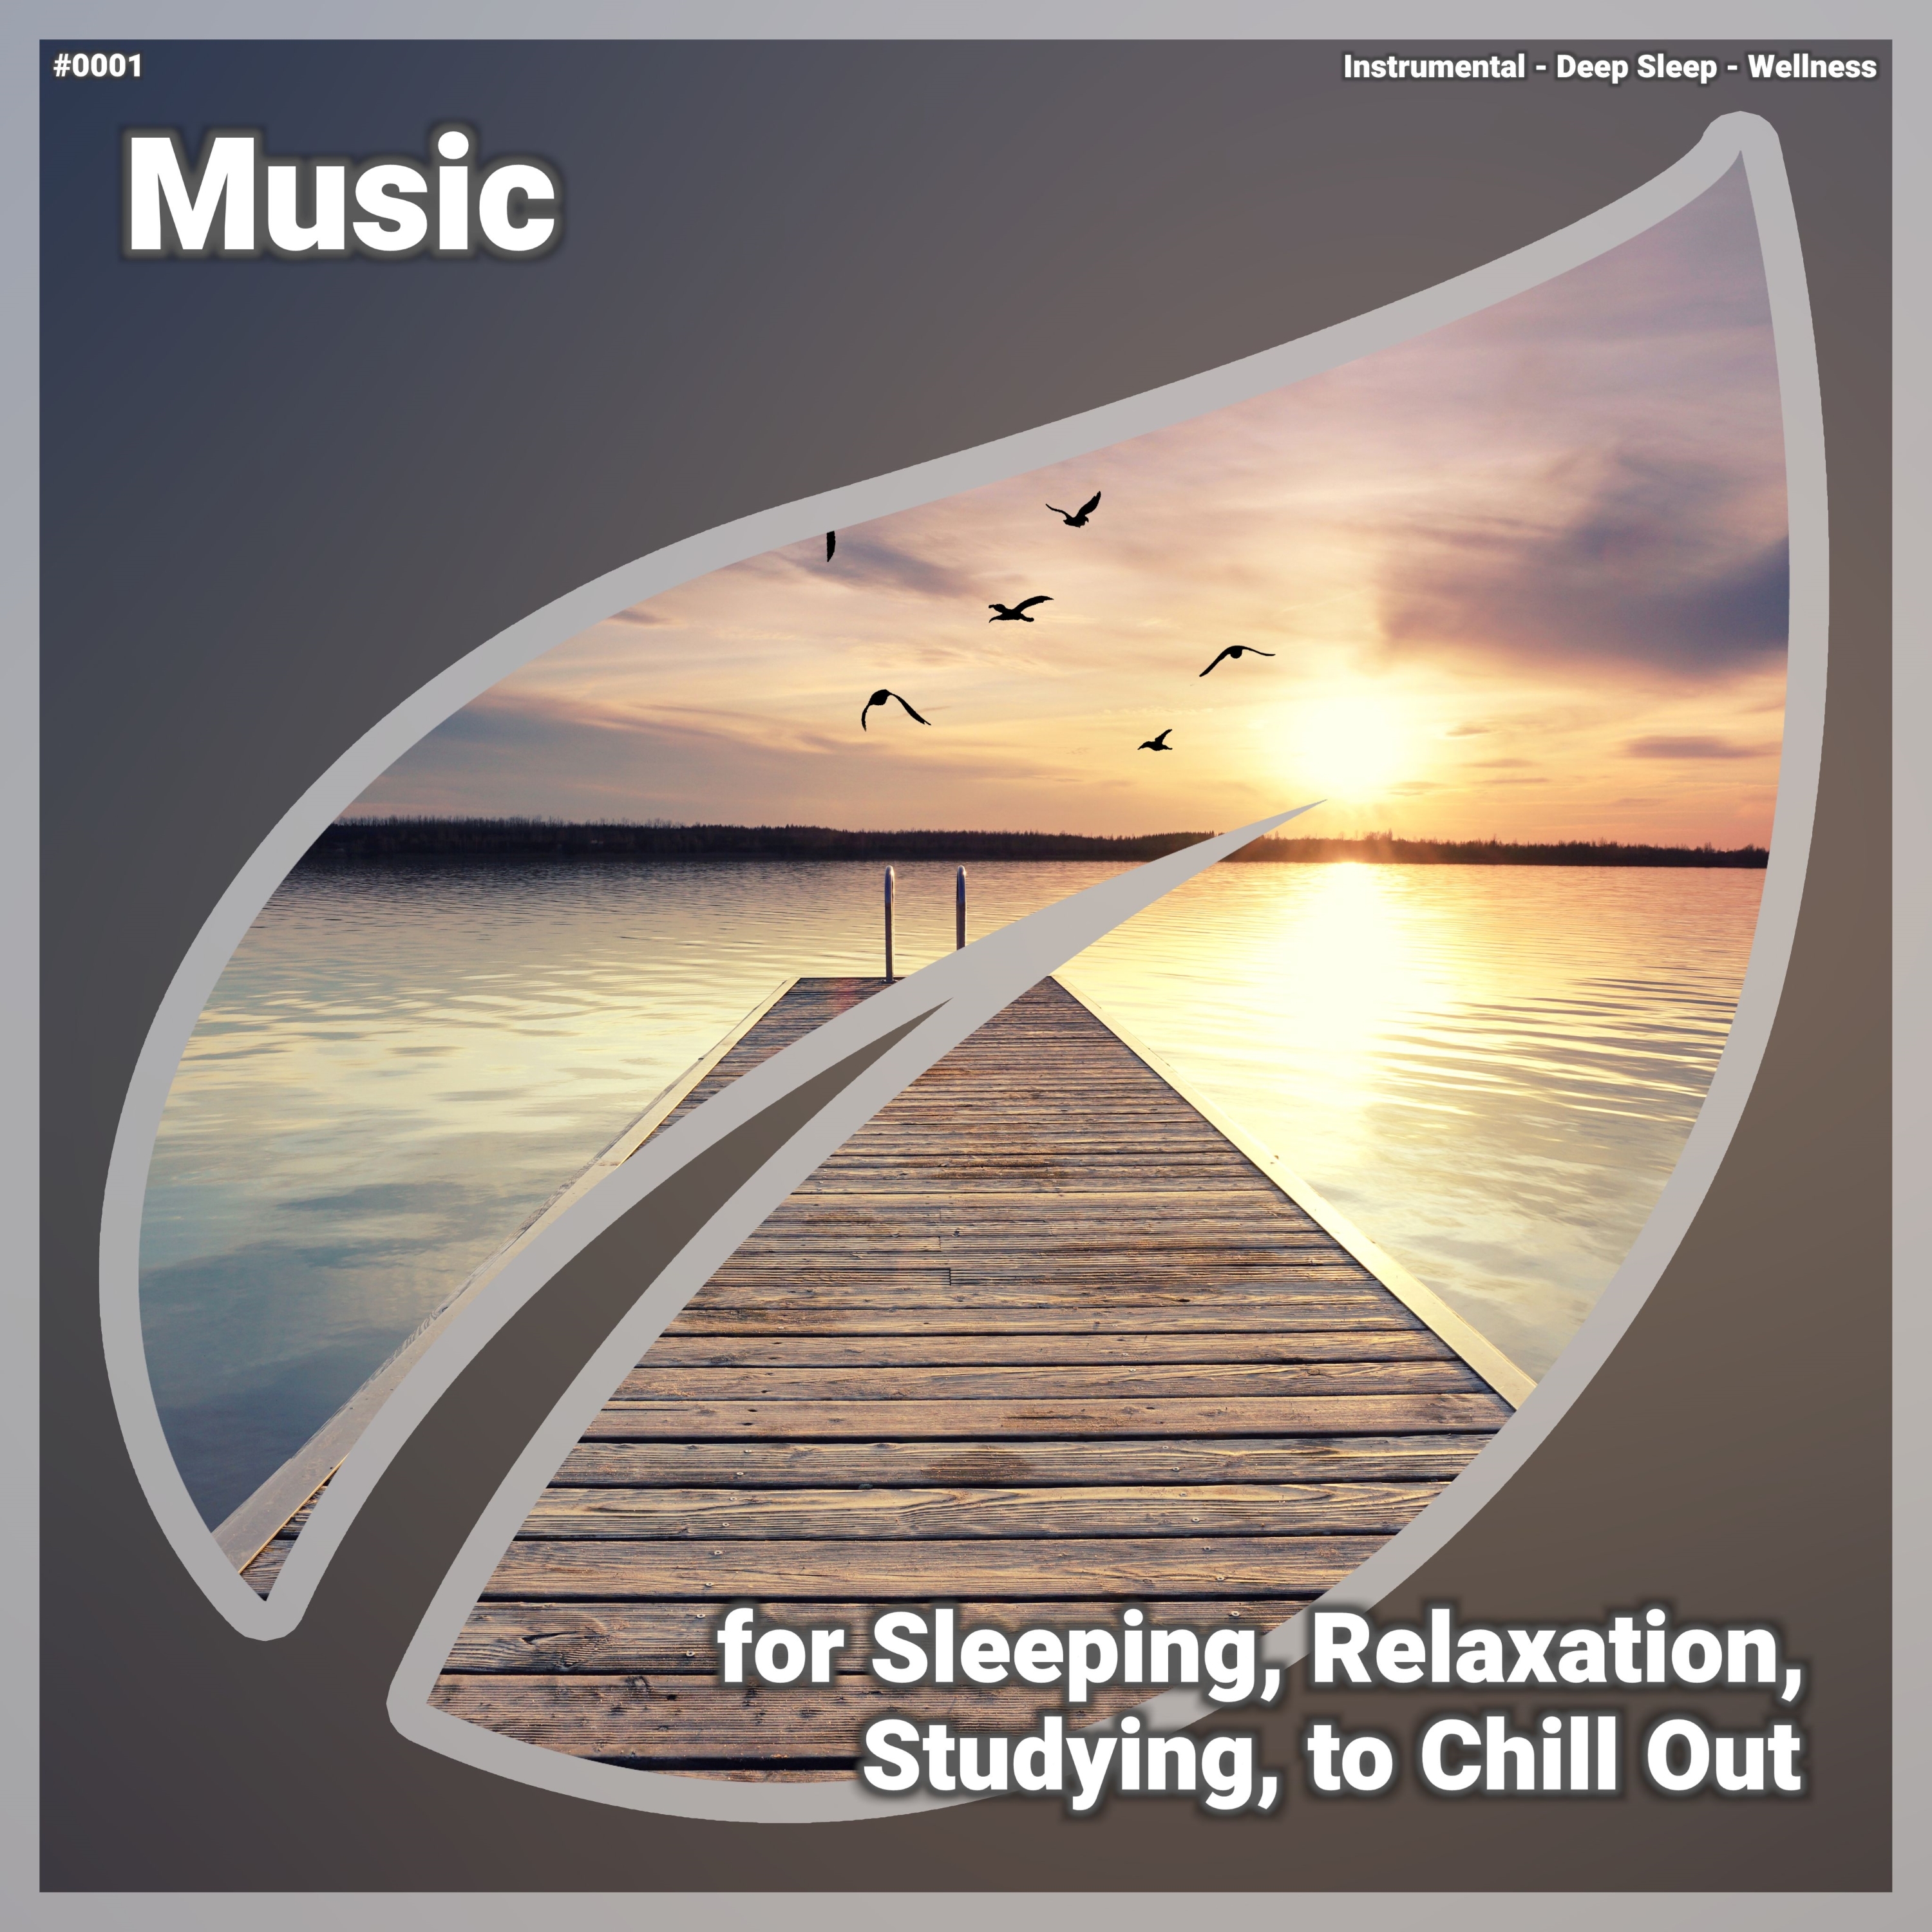 डाउनलोड करा Relaxing Music, Pt. 33